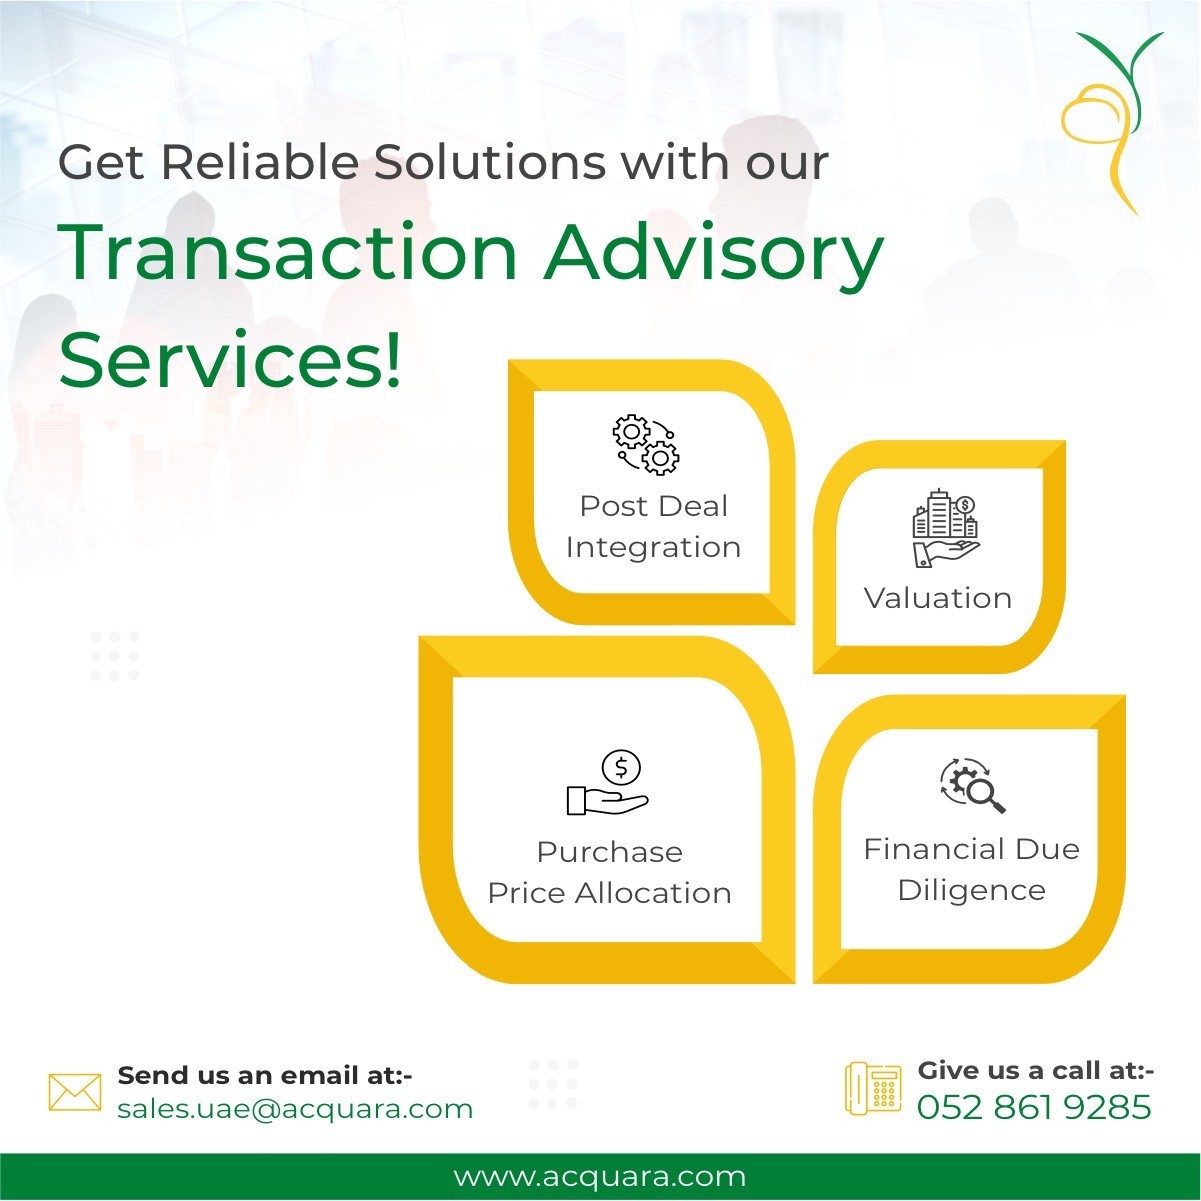 Transaction Advisory Services in Dubai, UAE